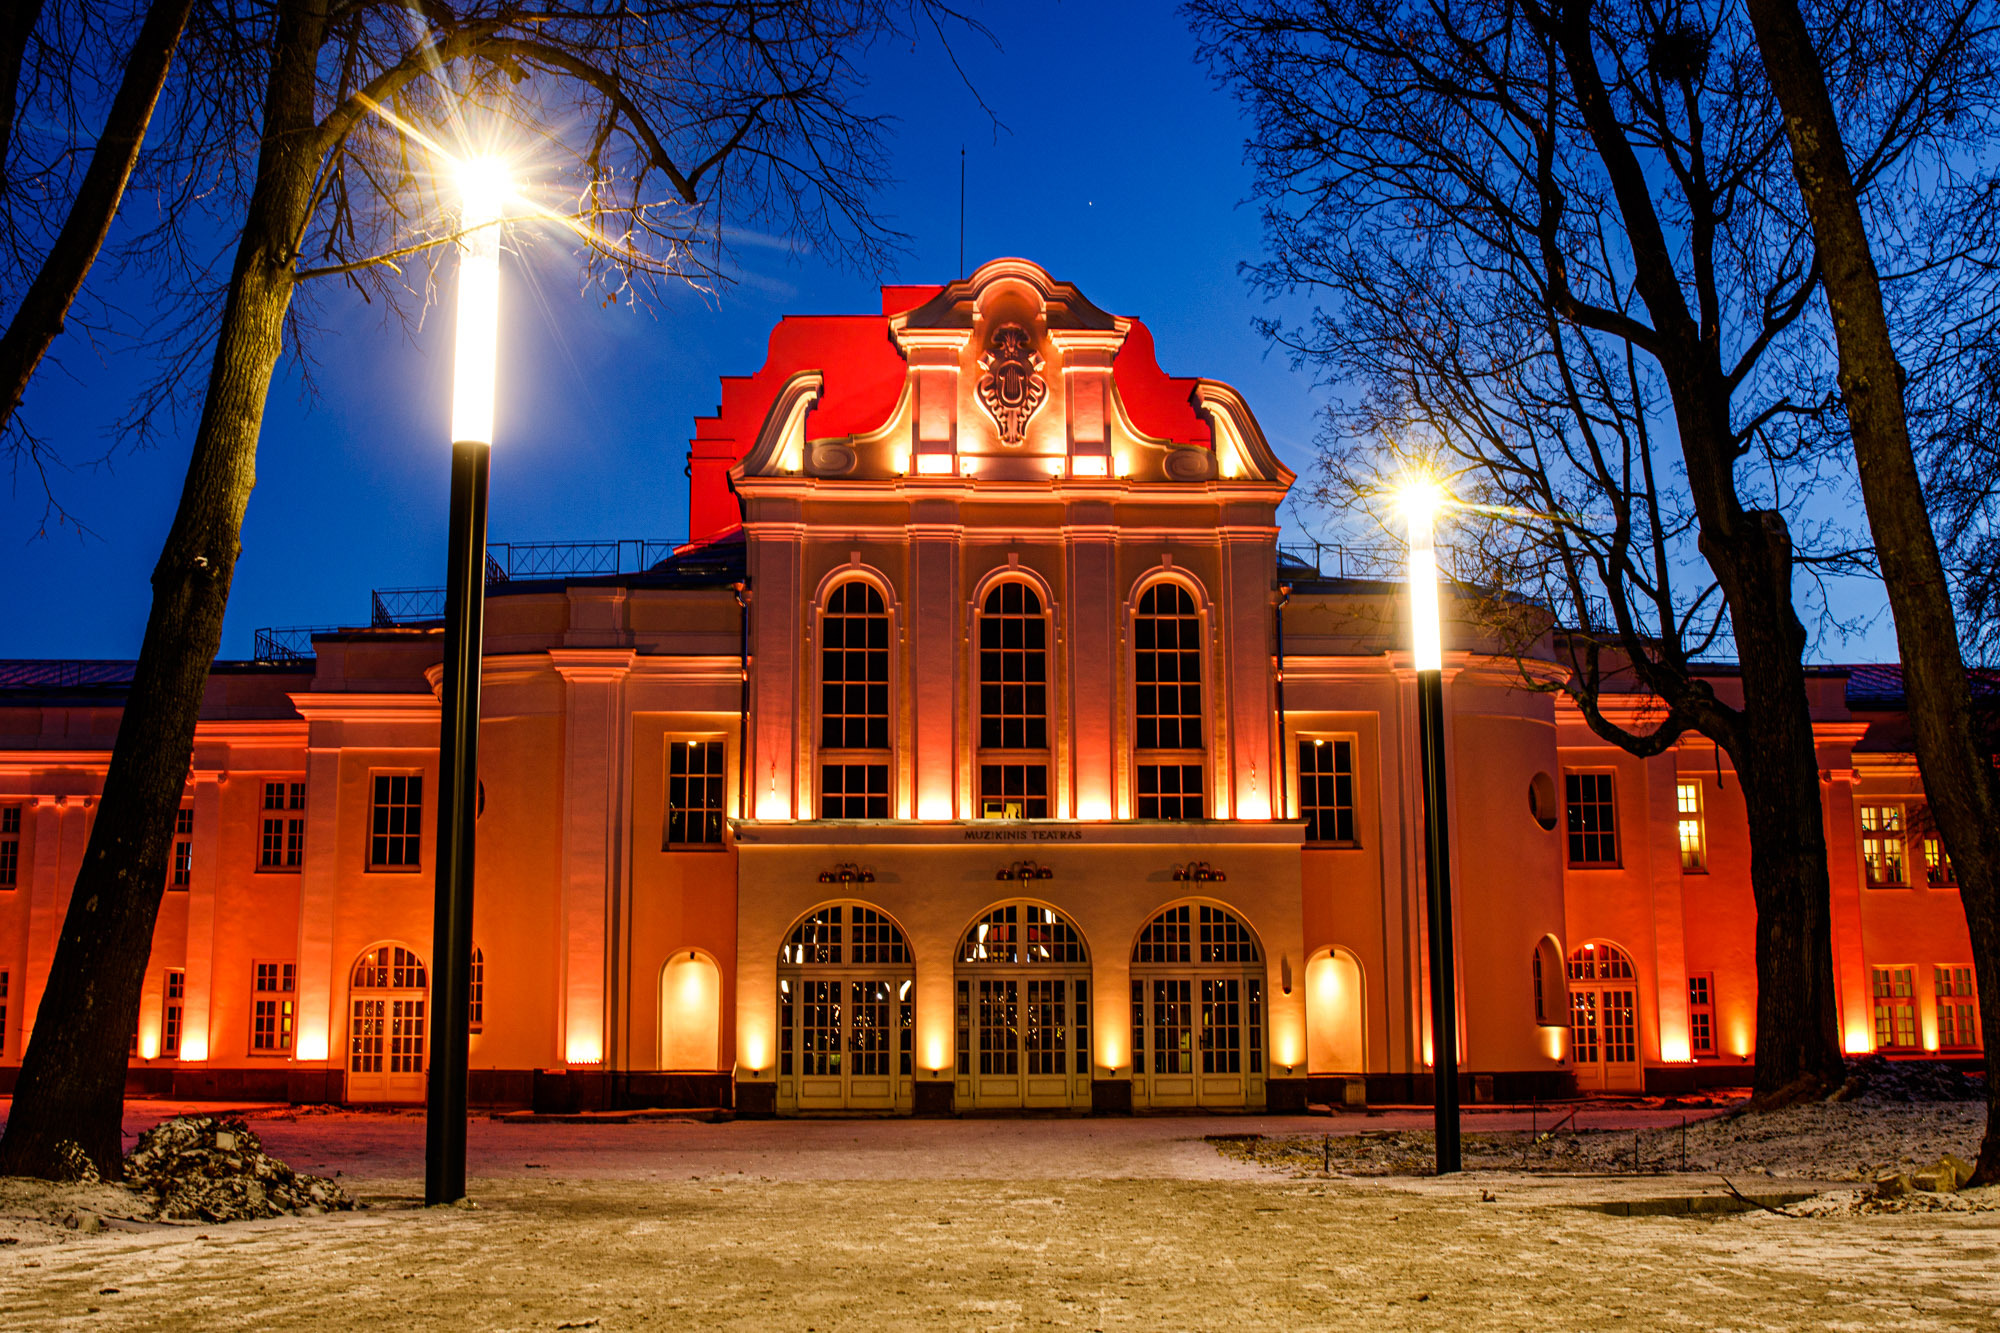 Kauno muzikinio teatro sodelis